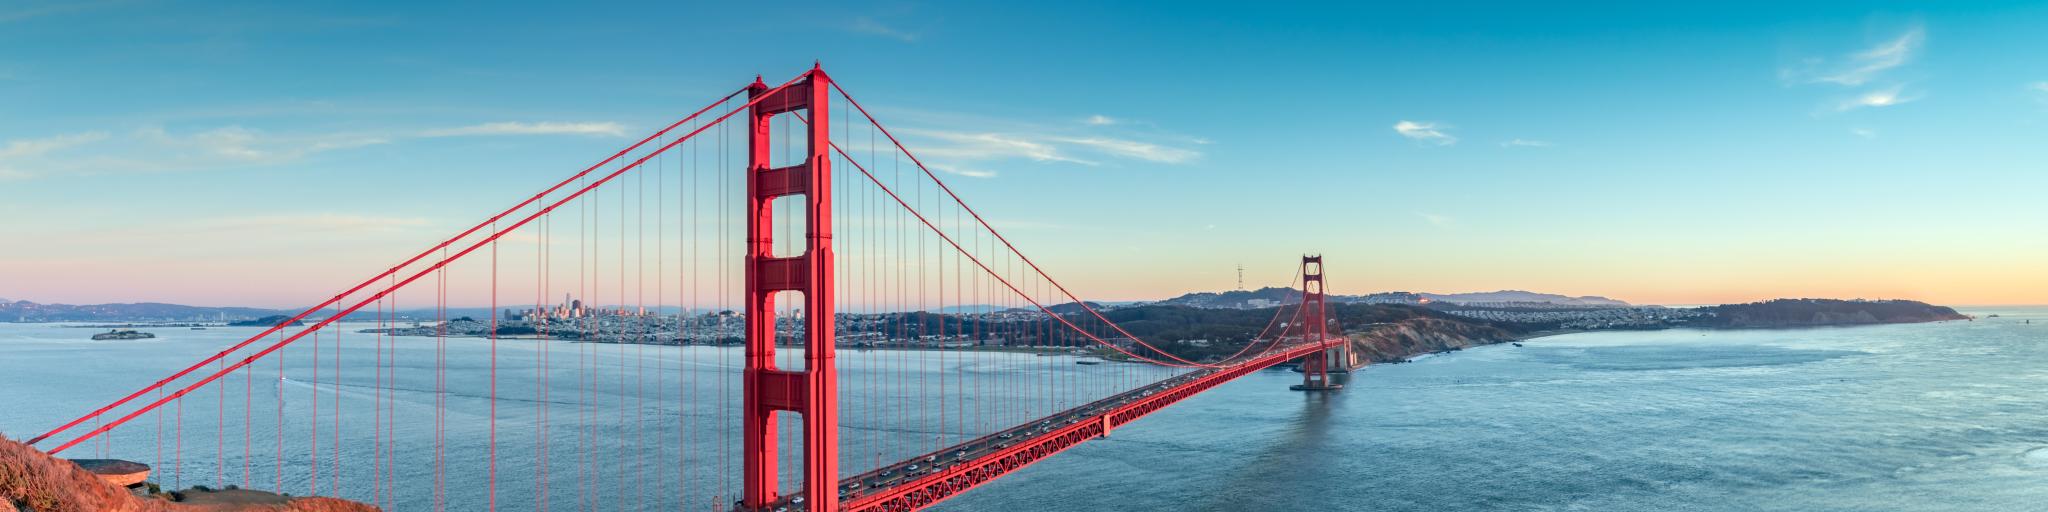 Golden Gate Bridge, San Francisco, USA at sunset.